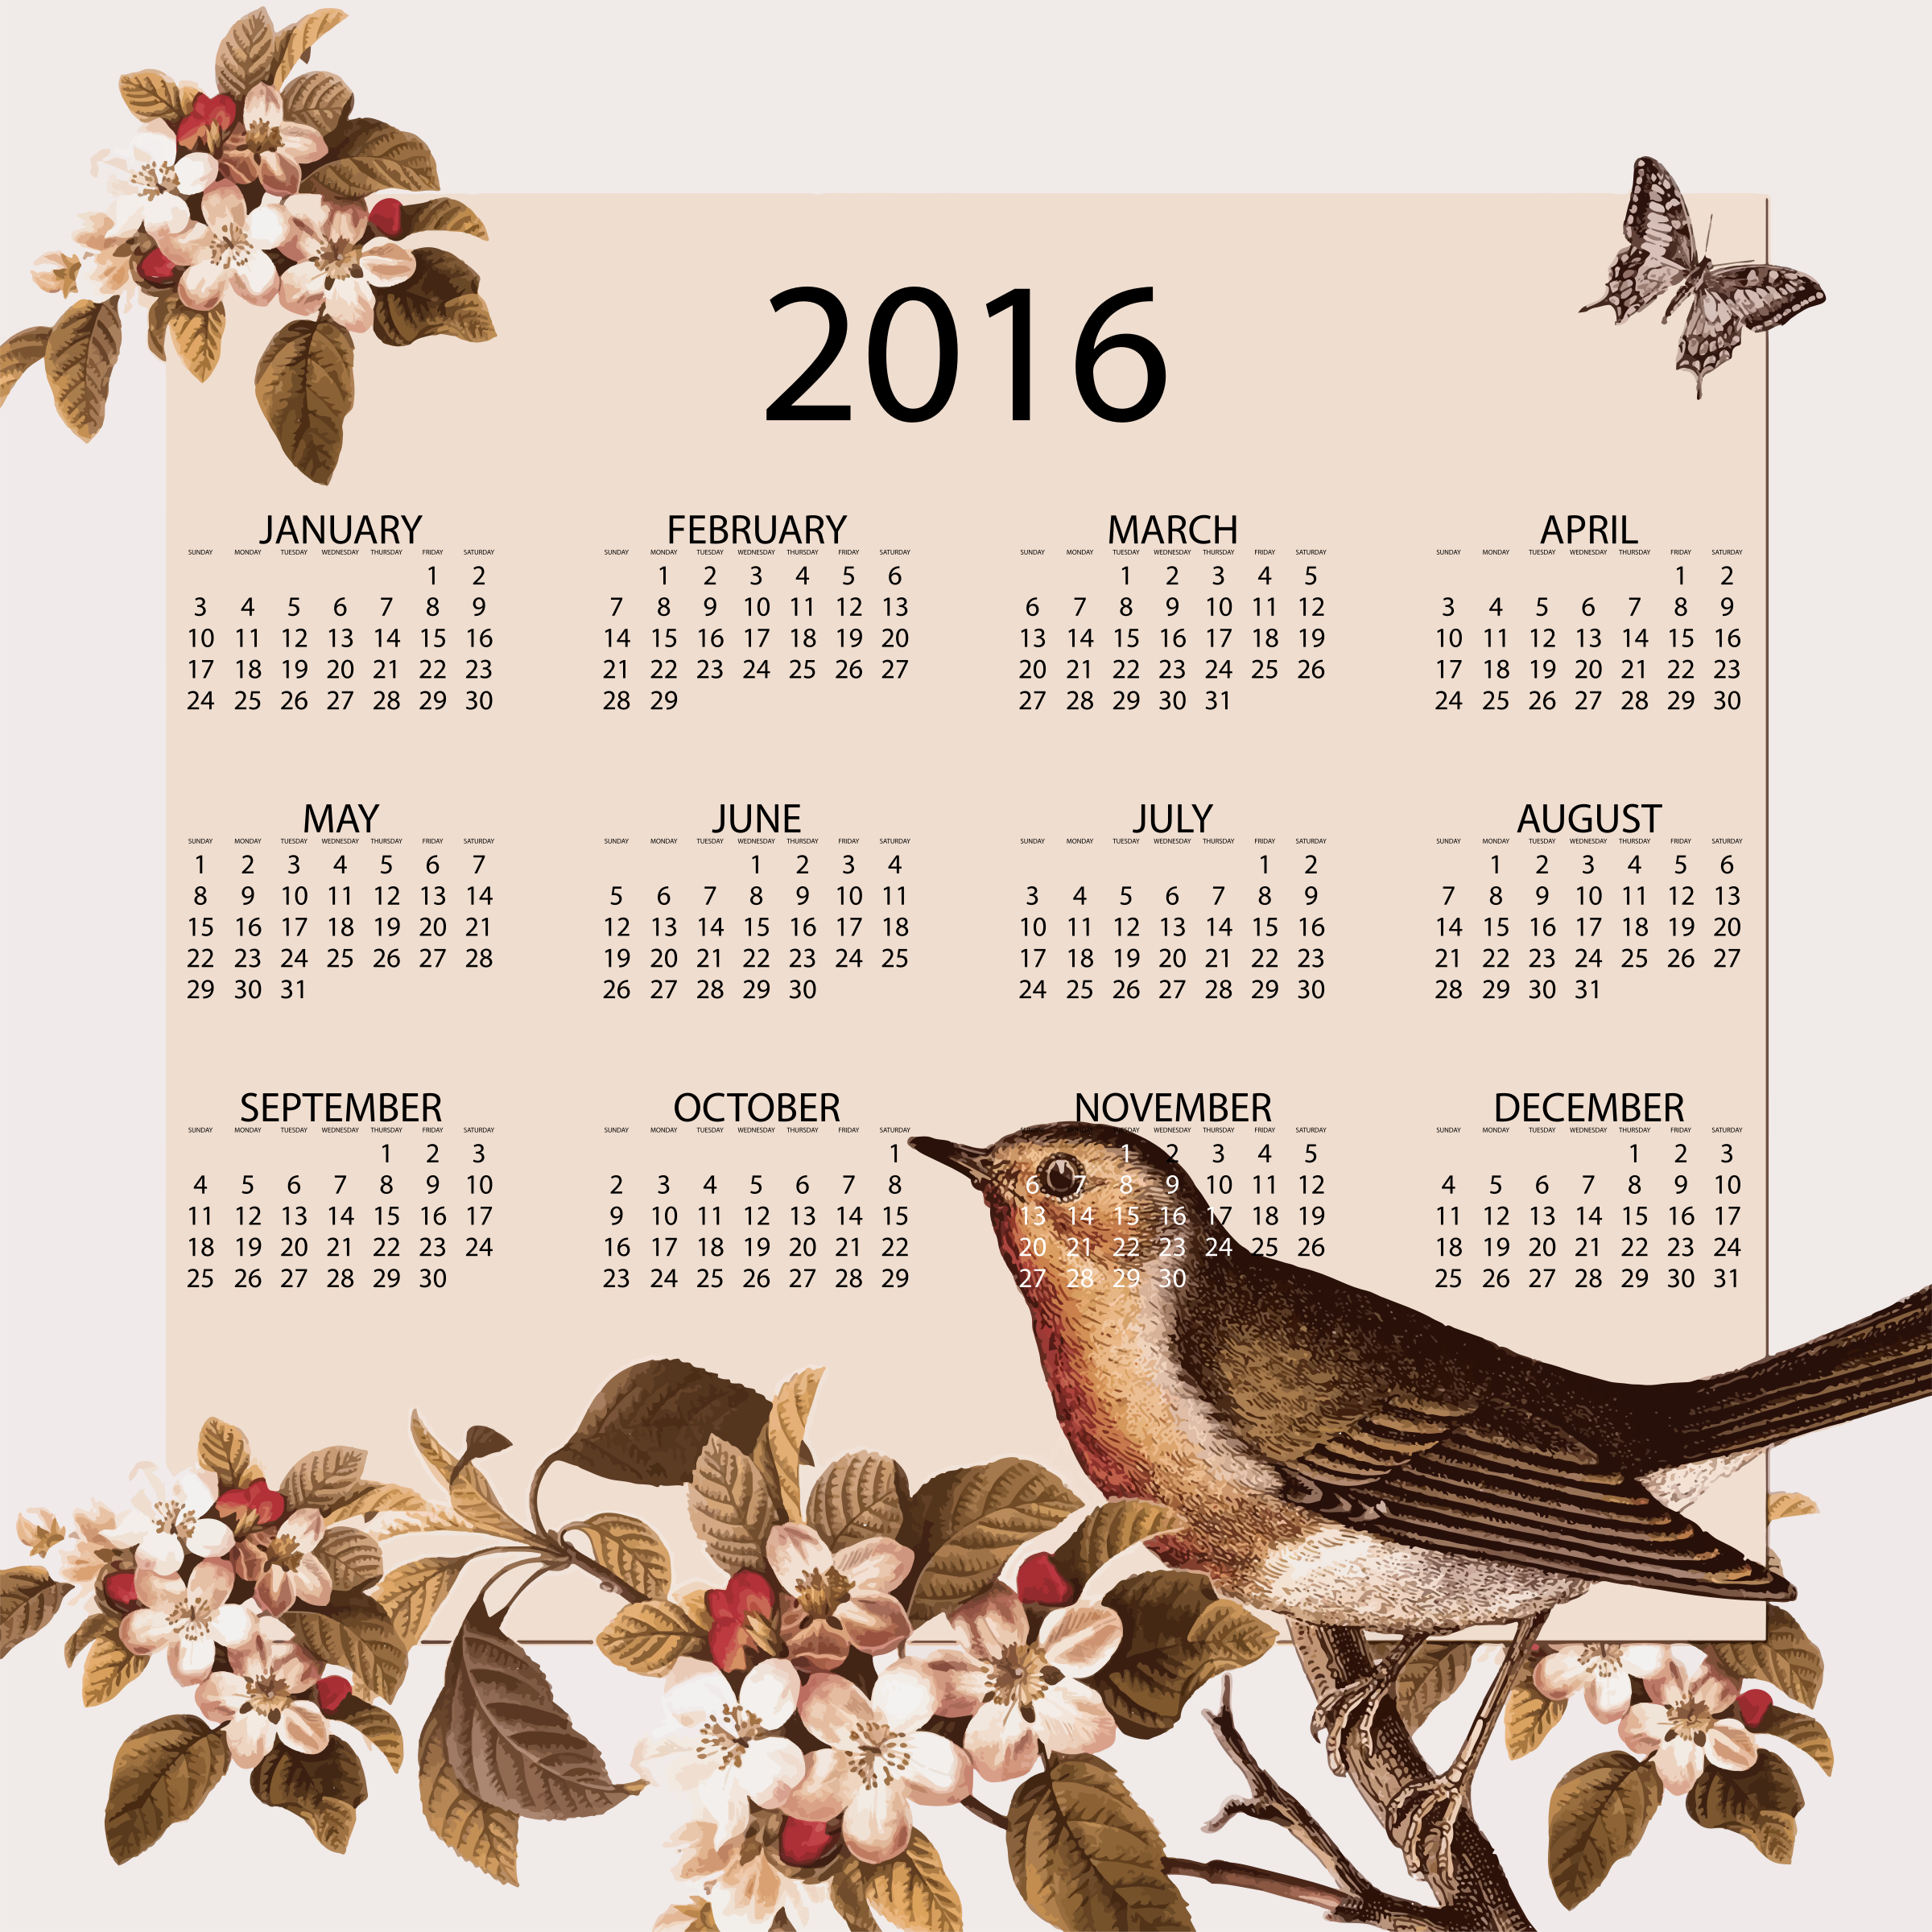 Vintage bird and floral. 2016 clipart 2016 calendar